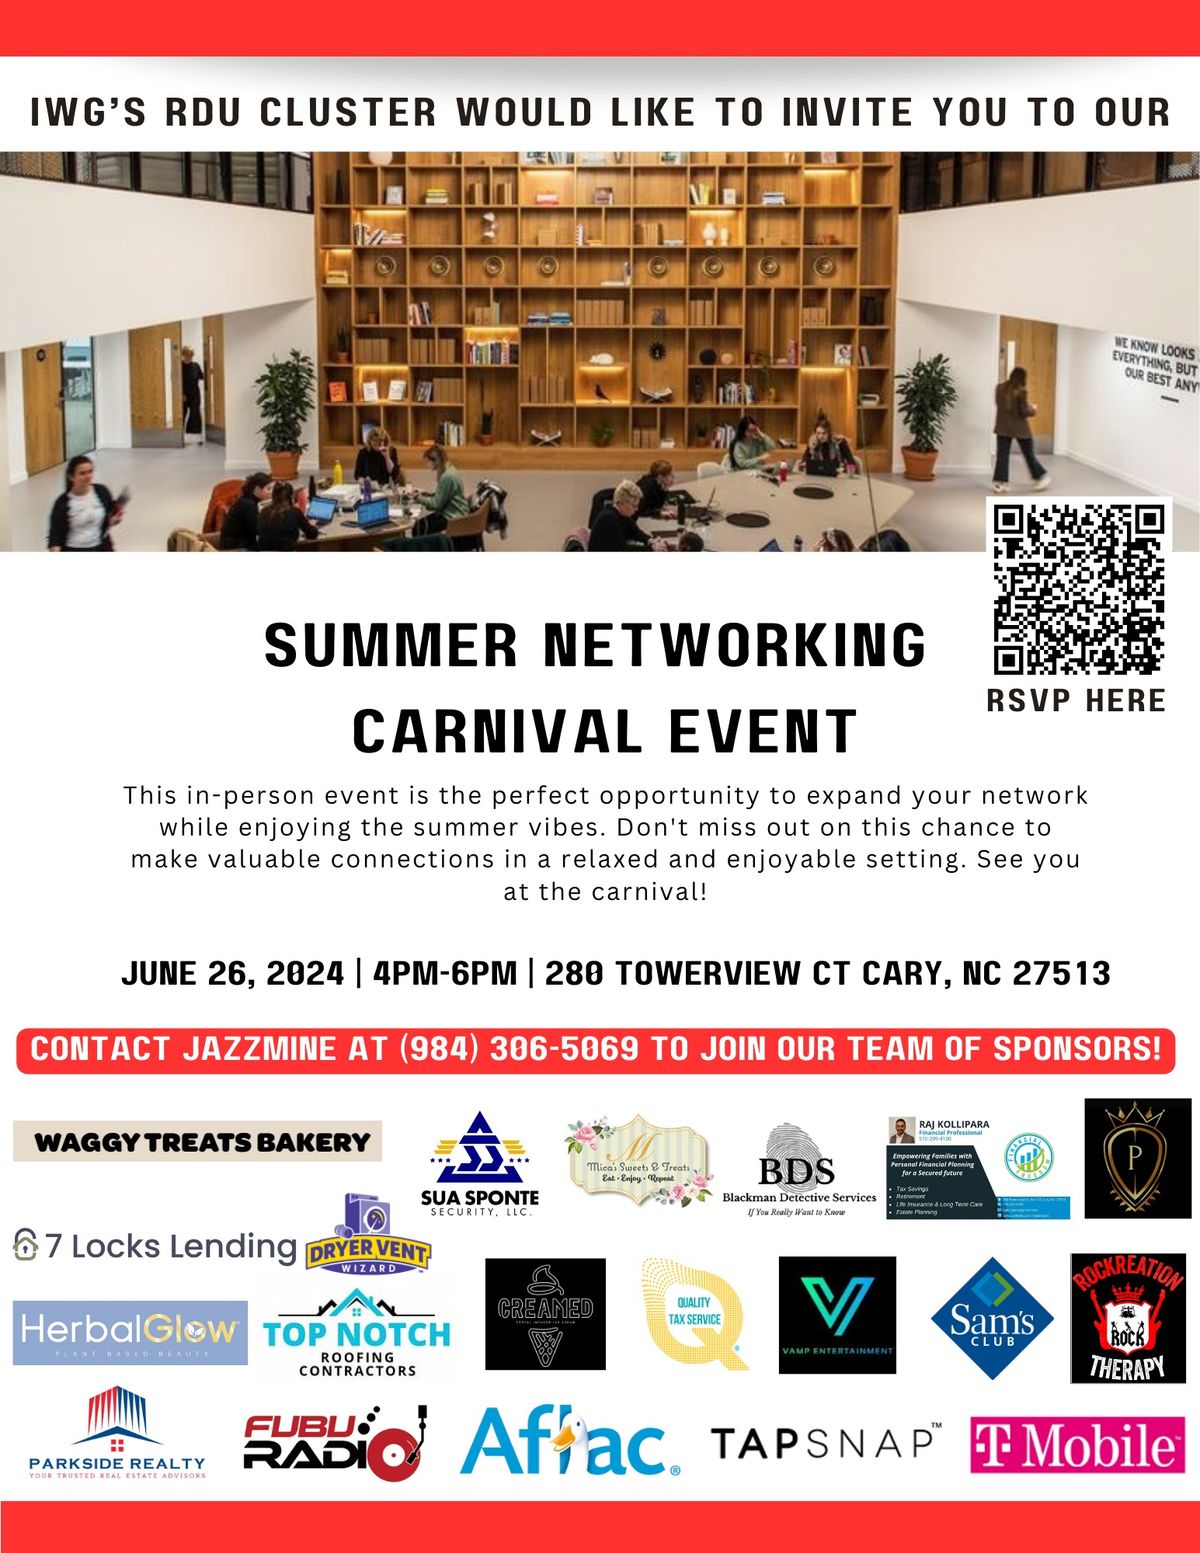 IWG\u2019s RDU Summer Networking Carnival Event